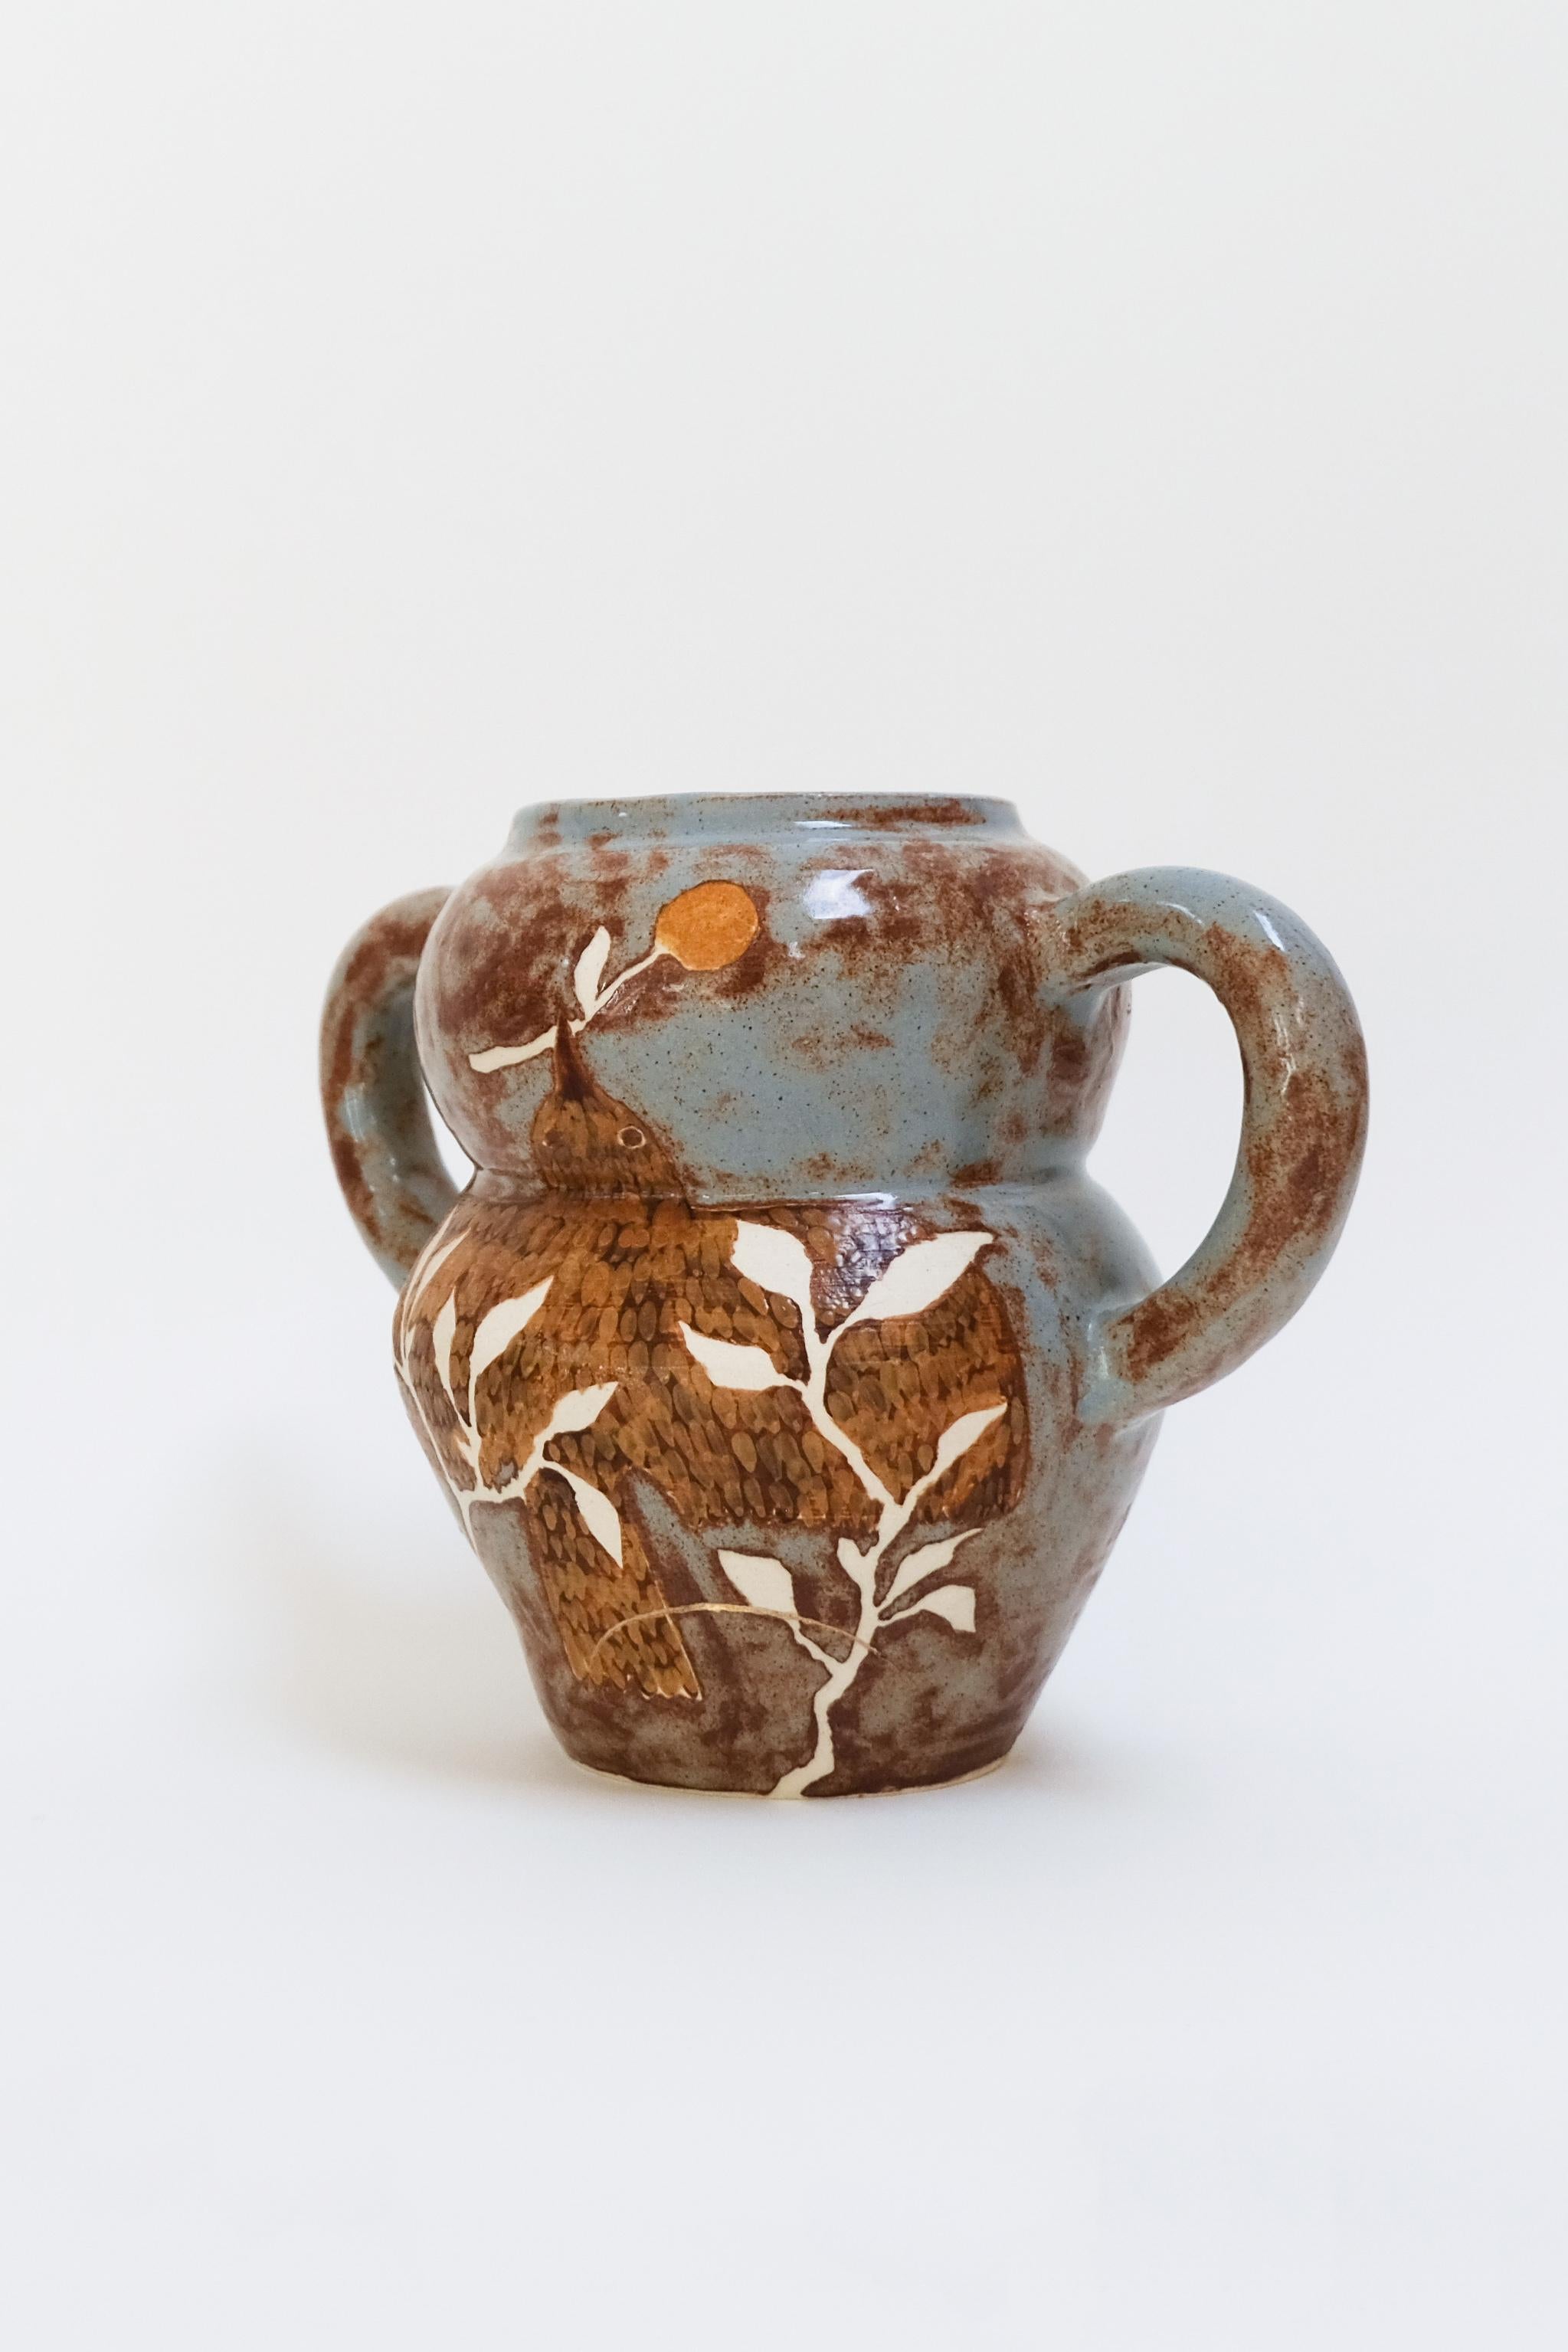 Messenger - contemporary warm botanical bird, handled ceramic vase, functional For Sale 1